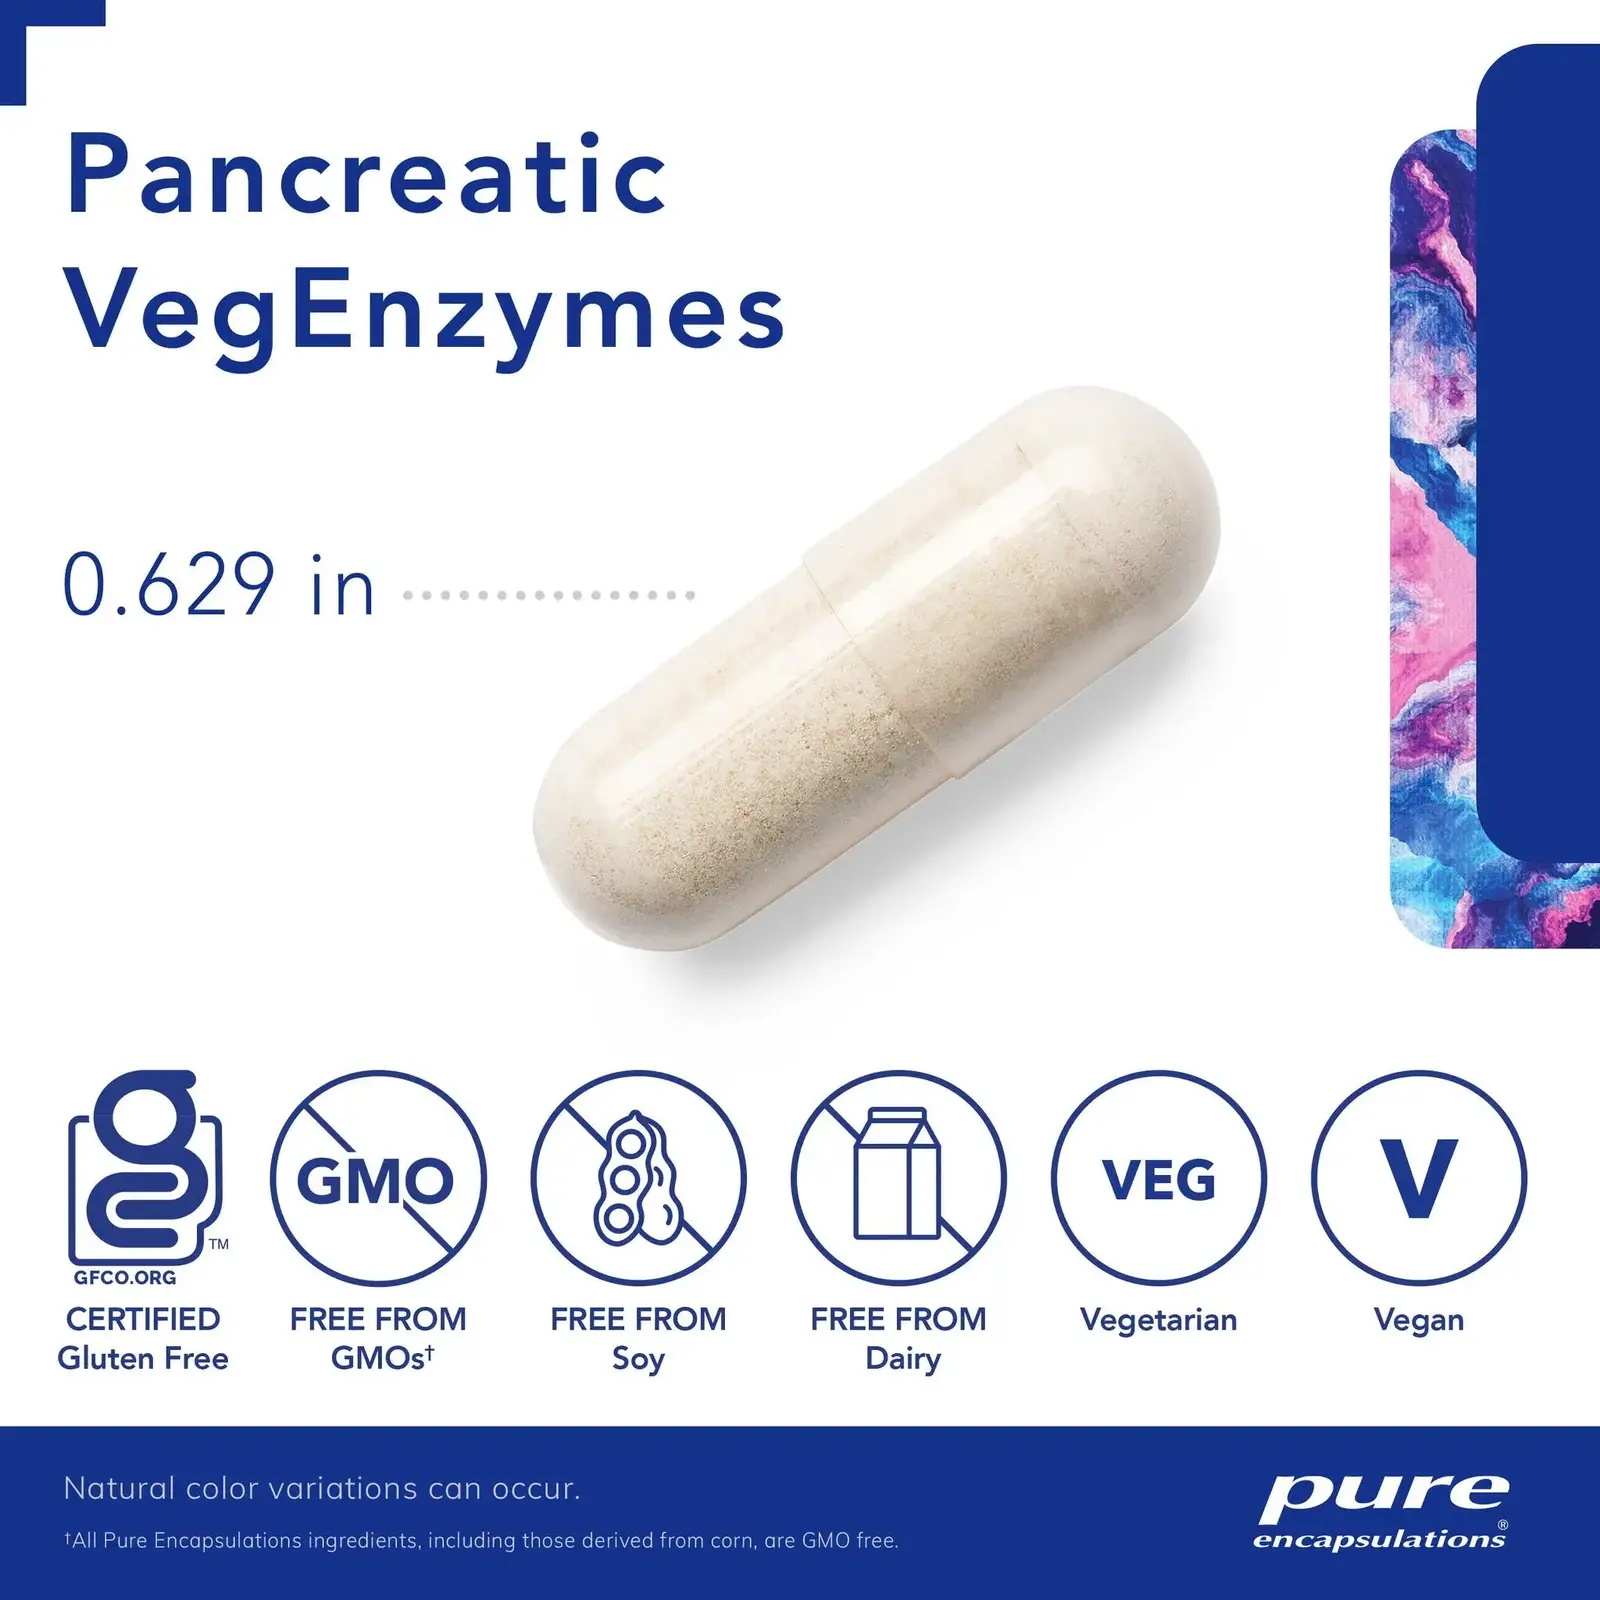 Pancreatic VegEnzymes